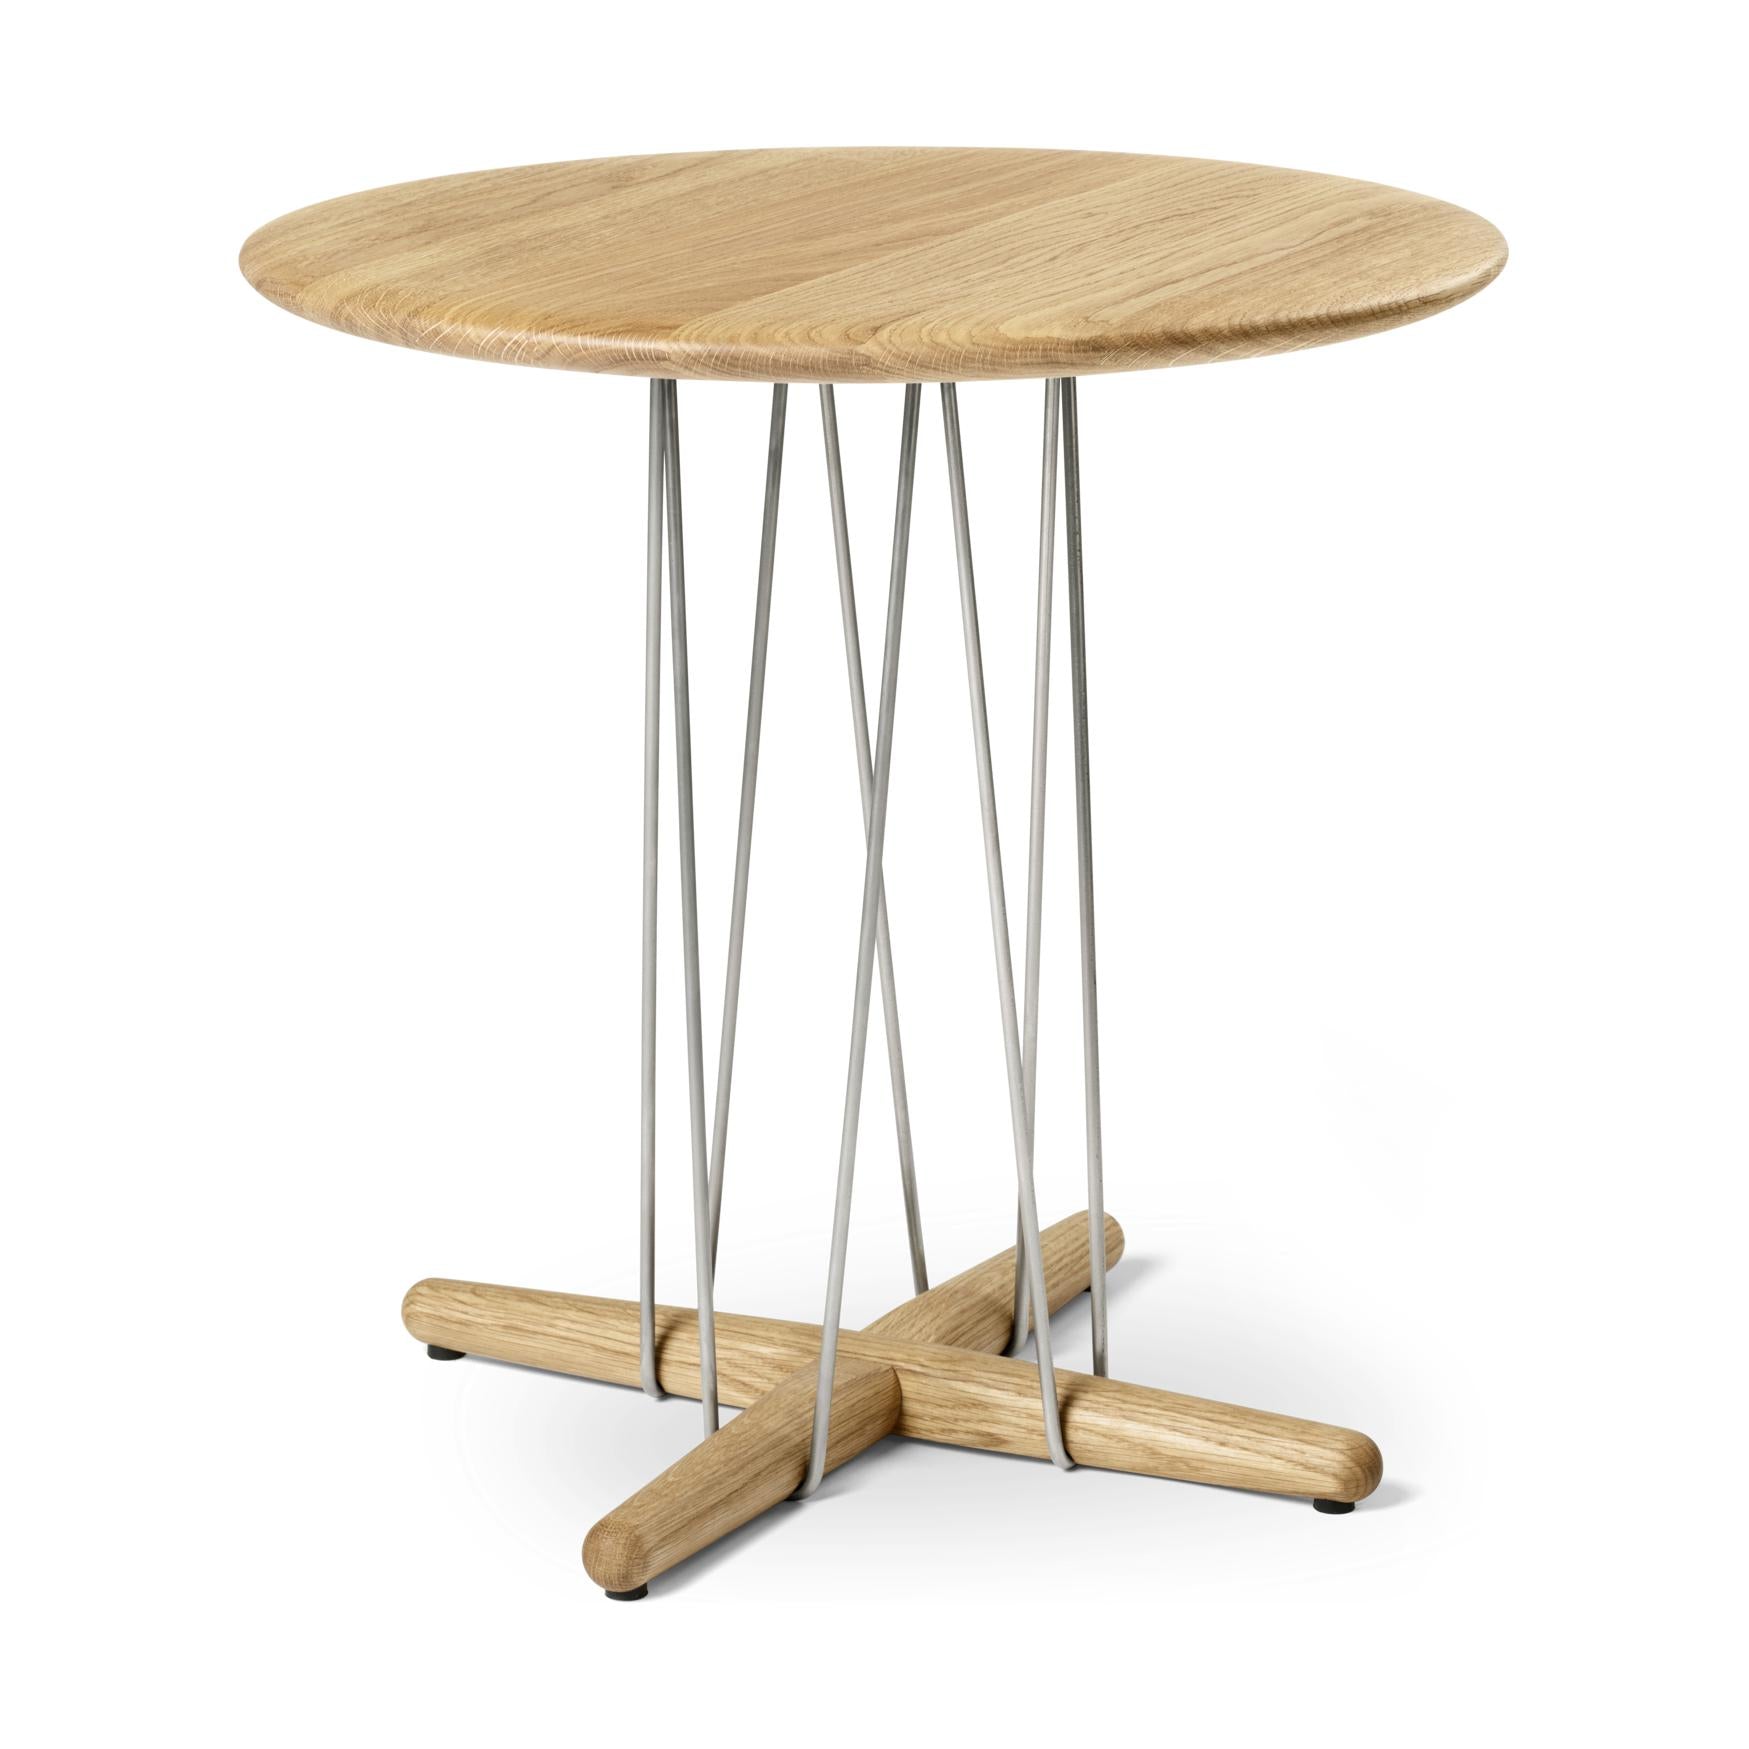 Carl Hansen E021 Embrace Table de salon, chêne huilé, ø 48 cm